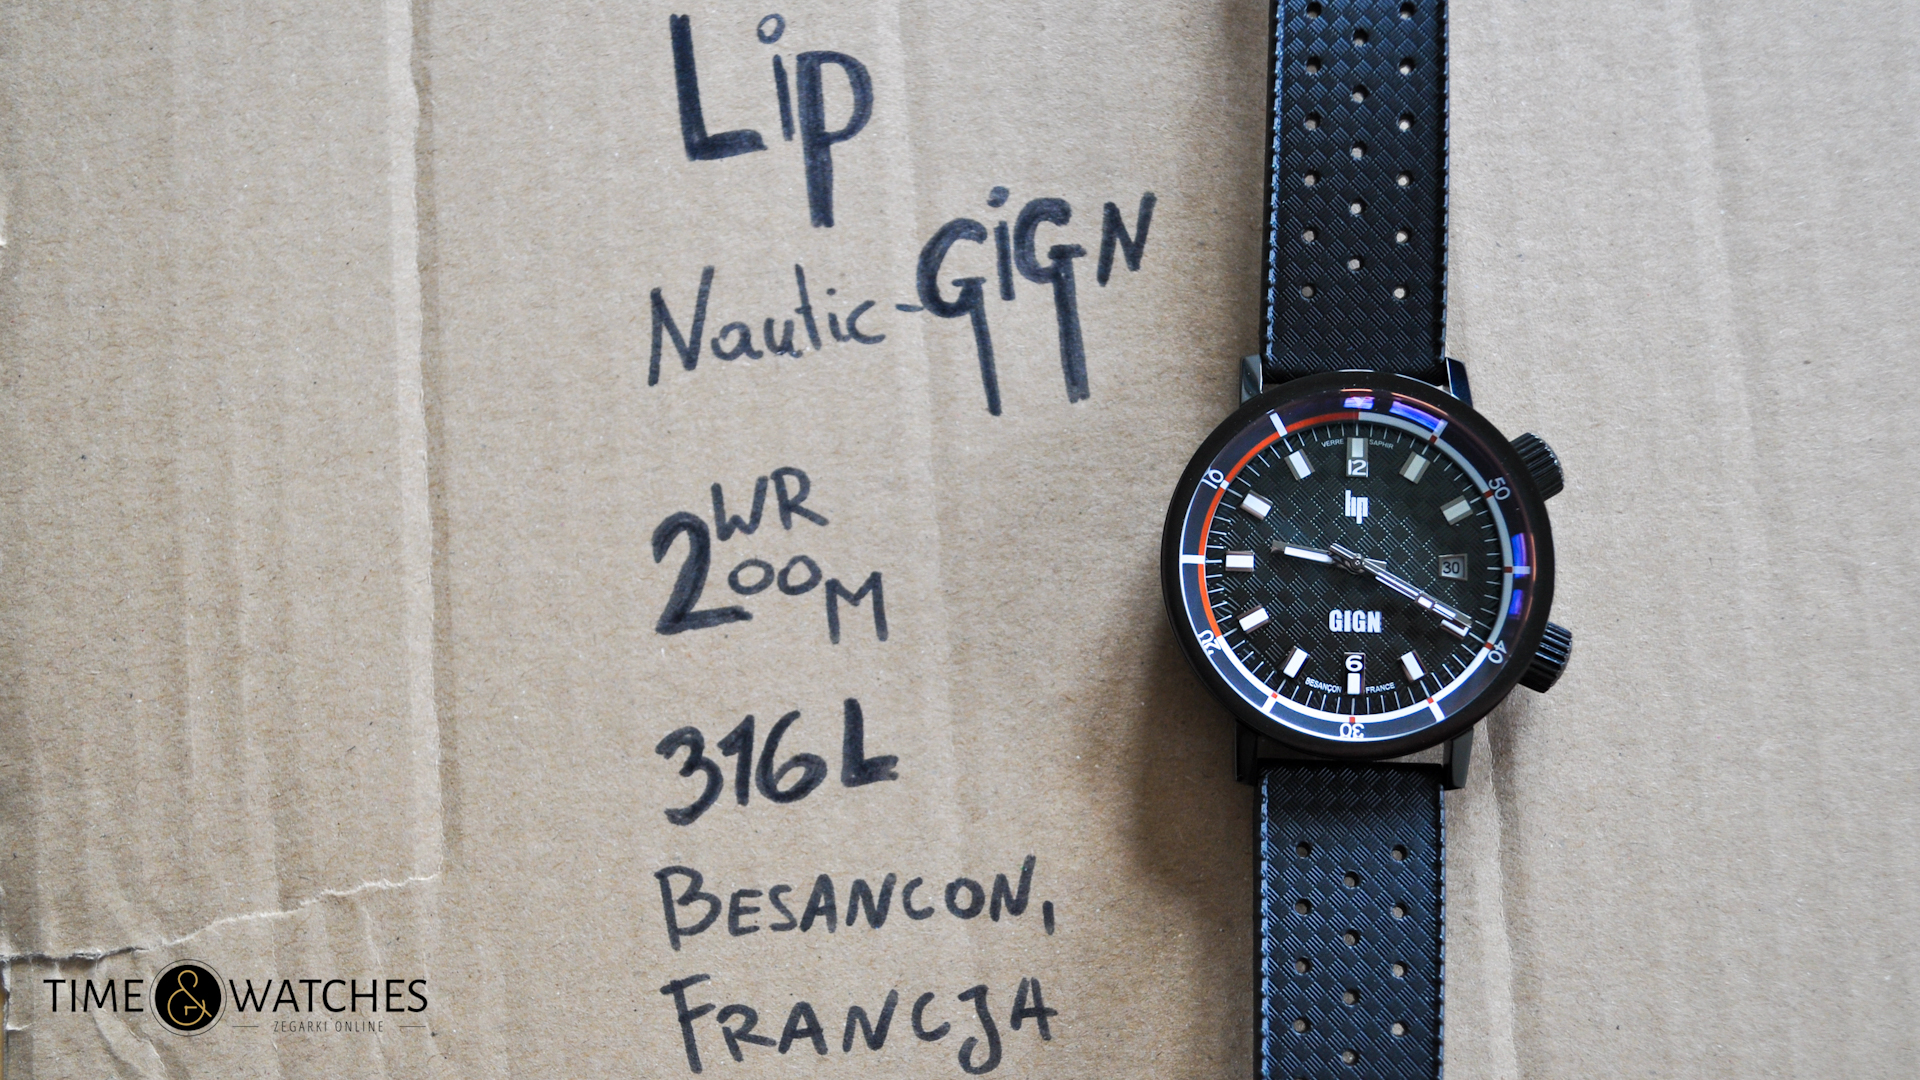 Lip Grande Nautic Ski vel Nautic-GIGN timeandwatches.pl